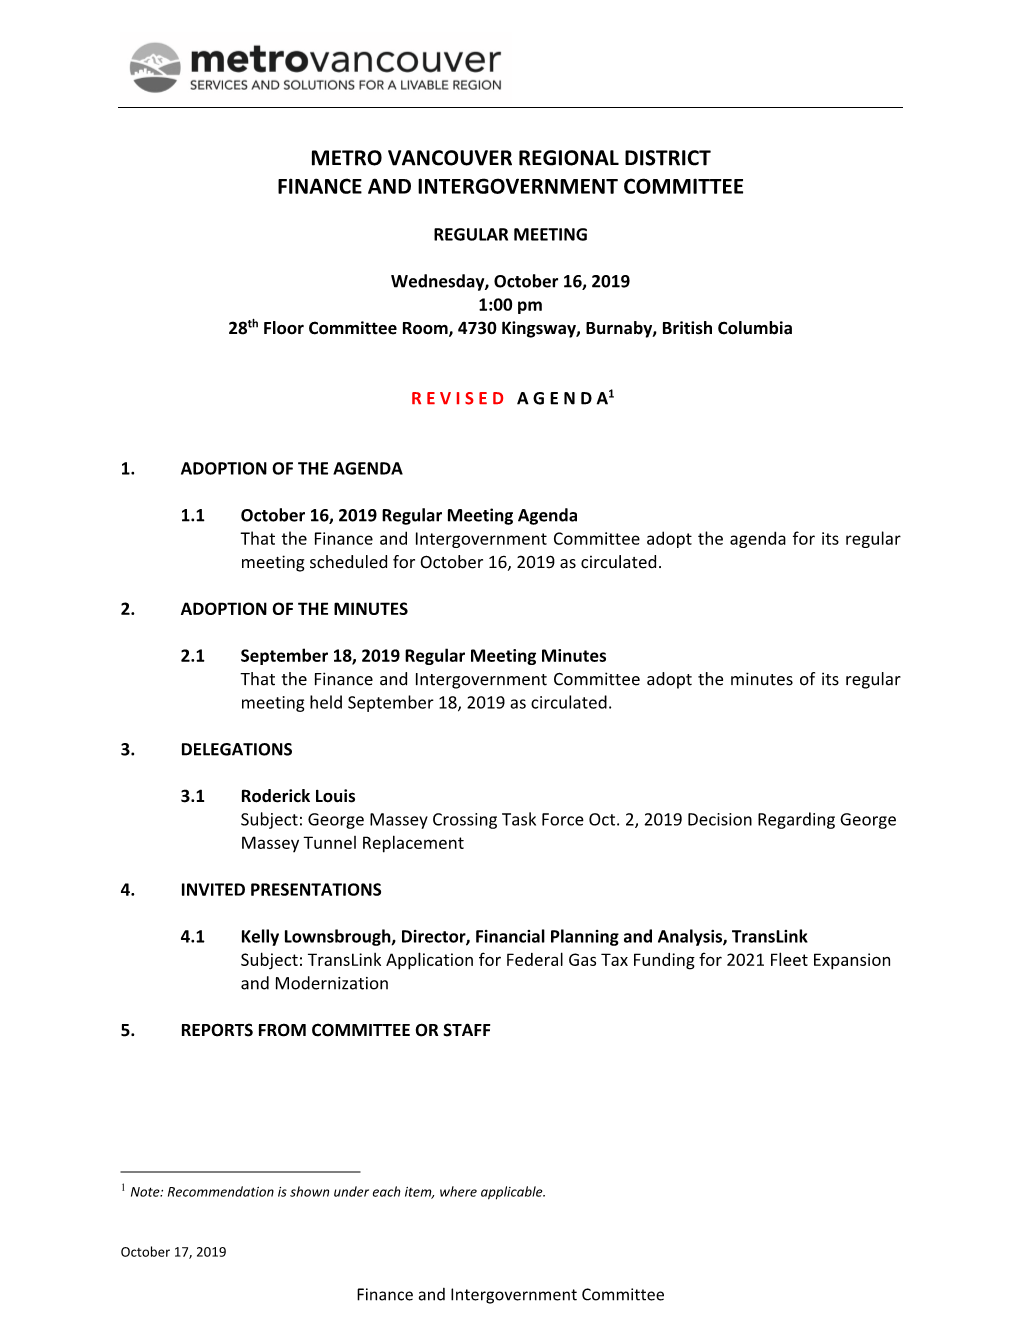 Finance and Intergovernment Committee Meeting Agenda